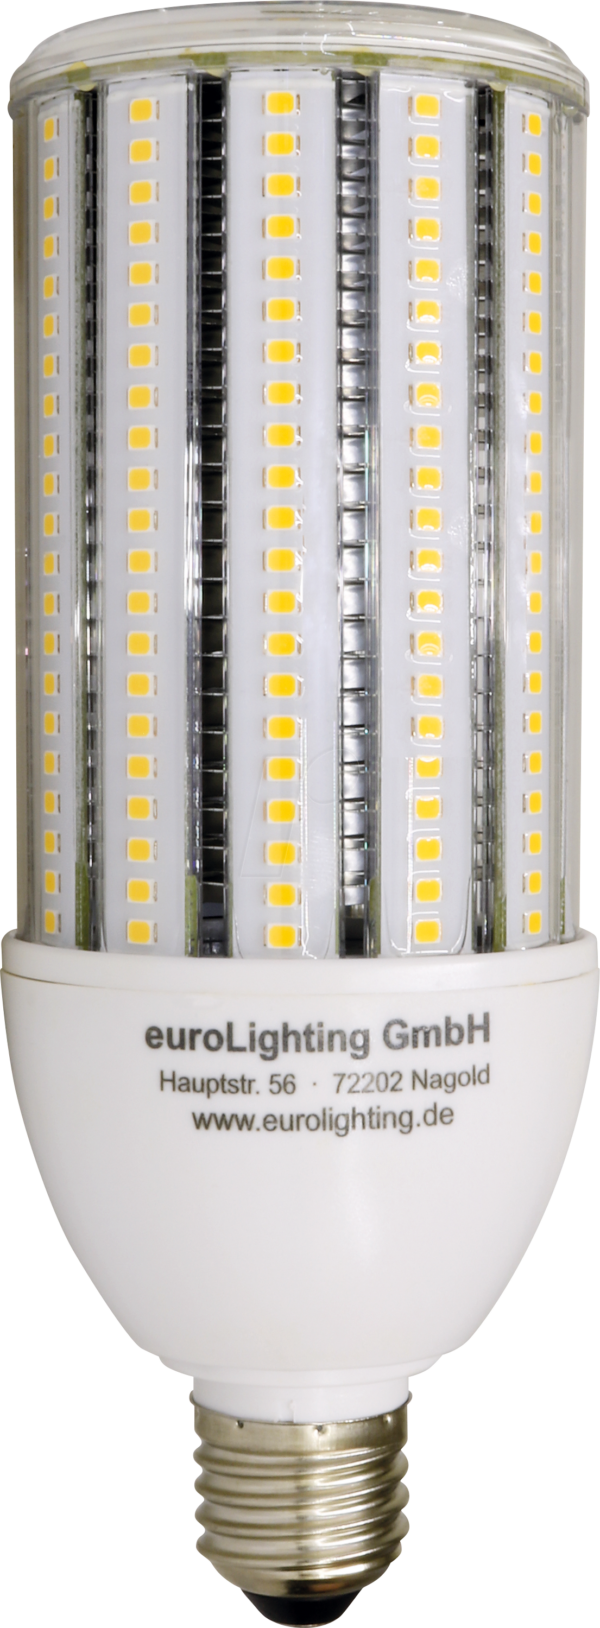 EURL 05DAC00035 - LED-Lampe E27